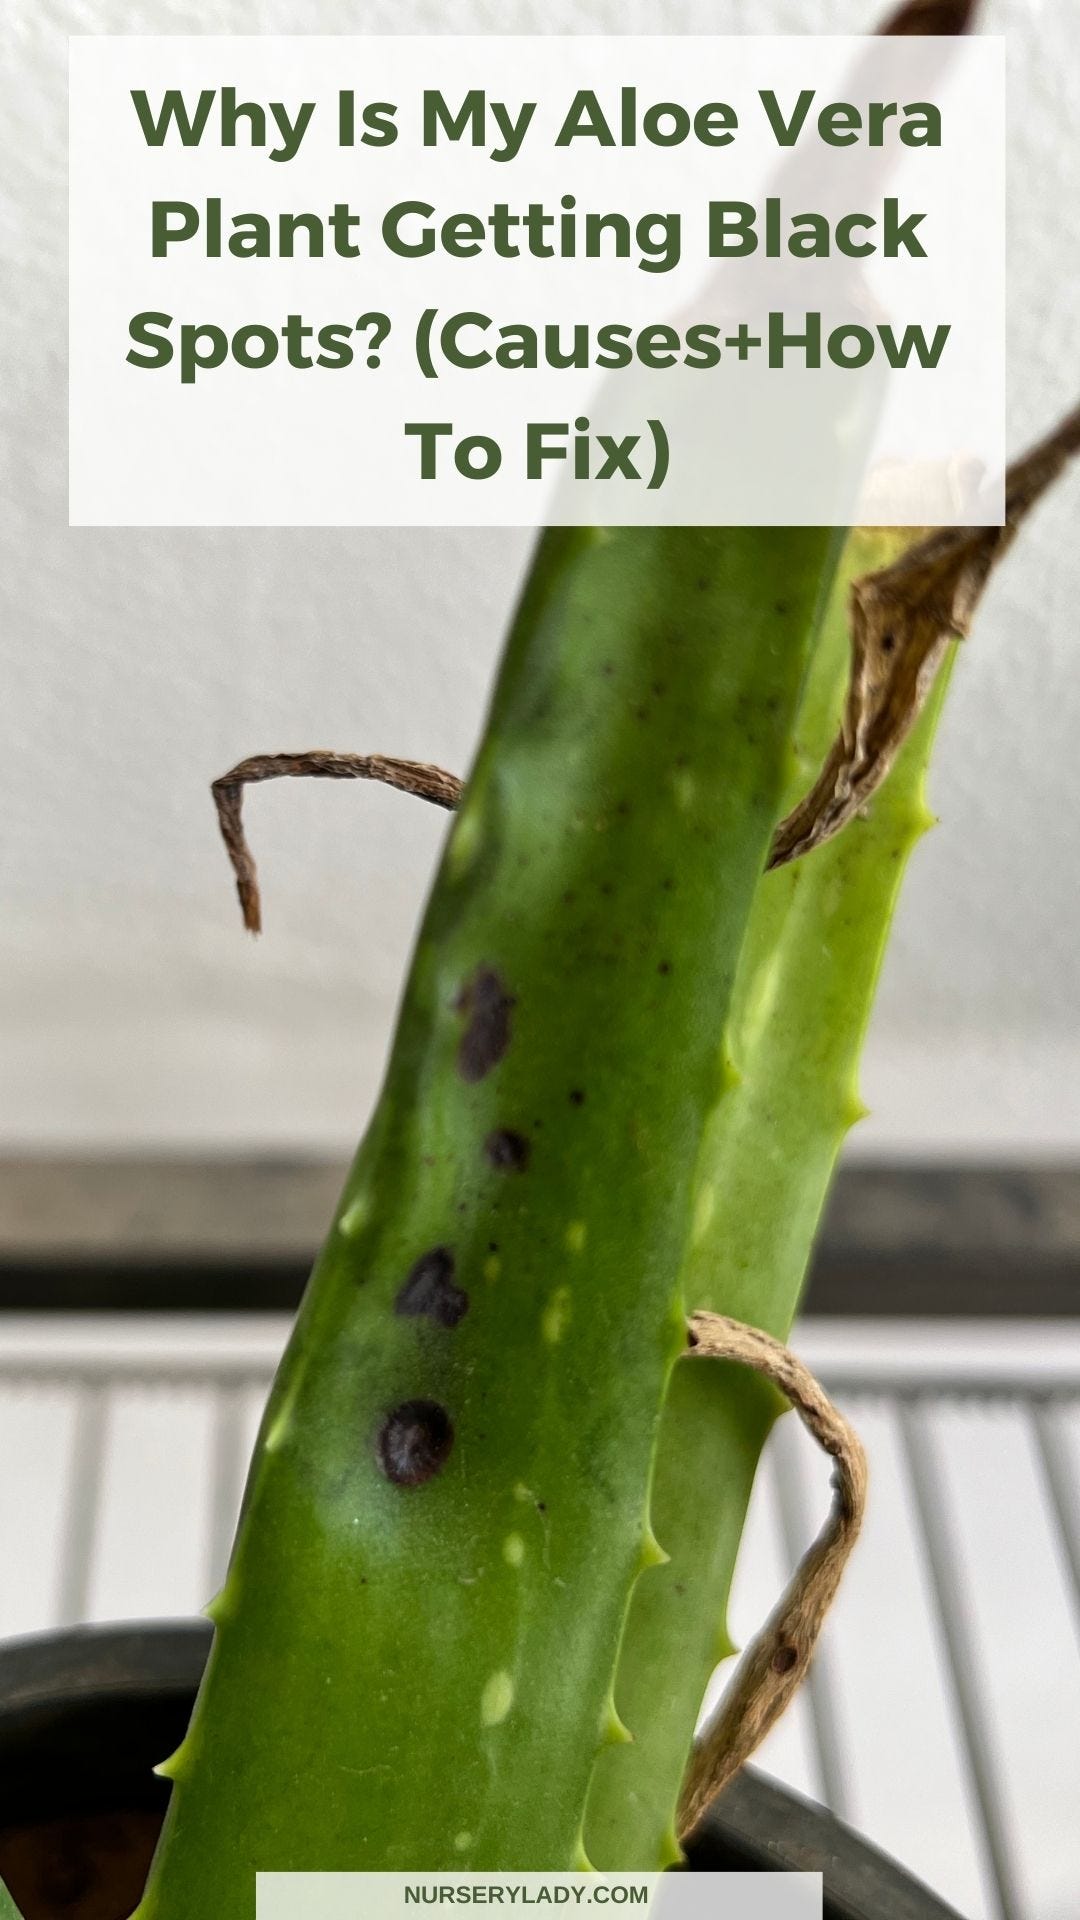 Why Is My Aloe Vera Plant Getting Black Spots? | by Nursery Lady | Medium